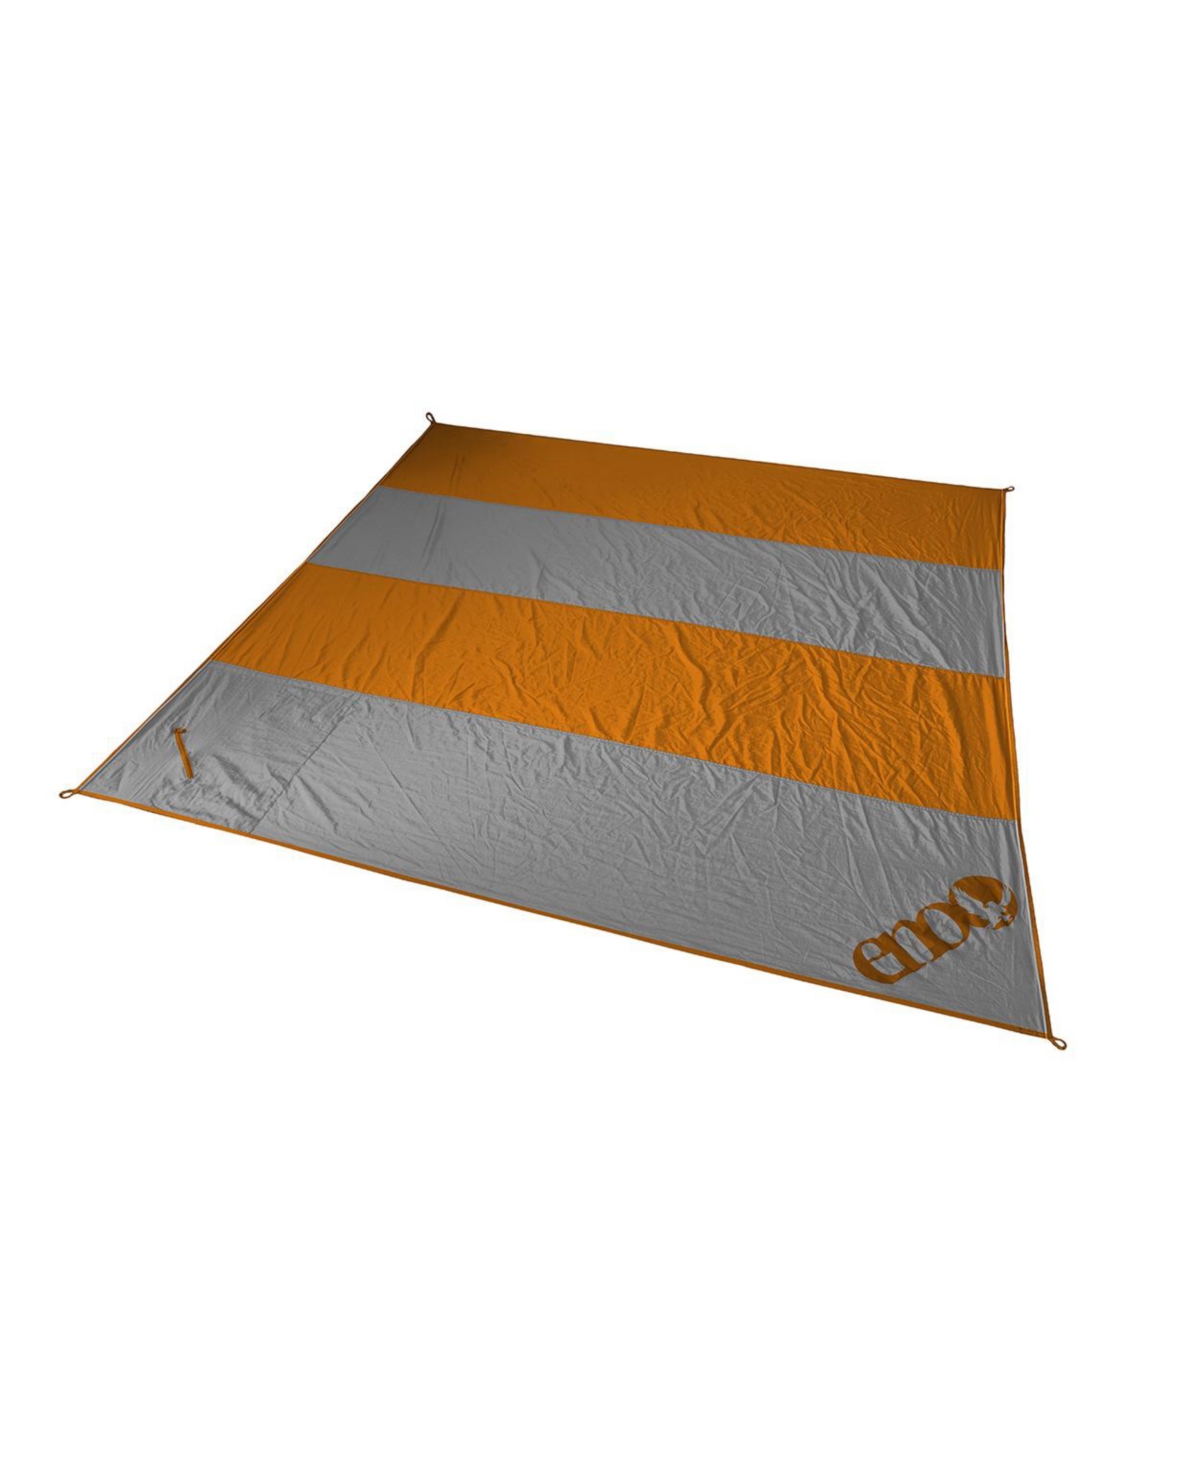 Islander Blanket - Lightweight Travel Blanket for Camping, Hiking, Backpacking, Festival, Picnics, Travel, or the Beach - Orange/Grey - Orange/Gre